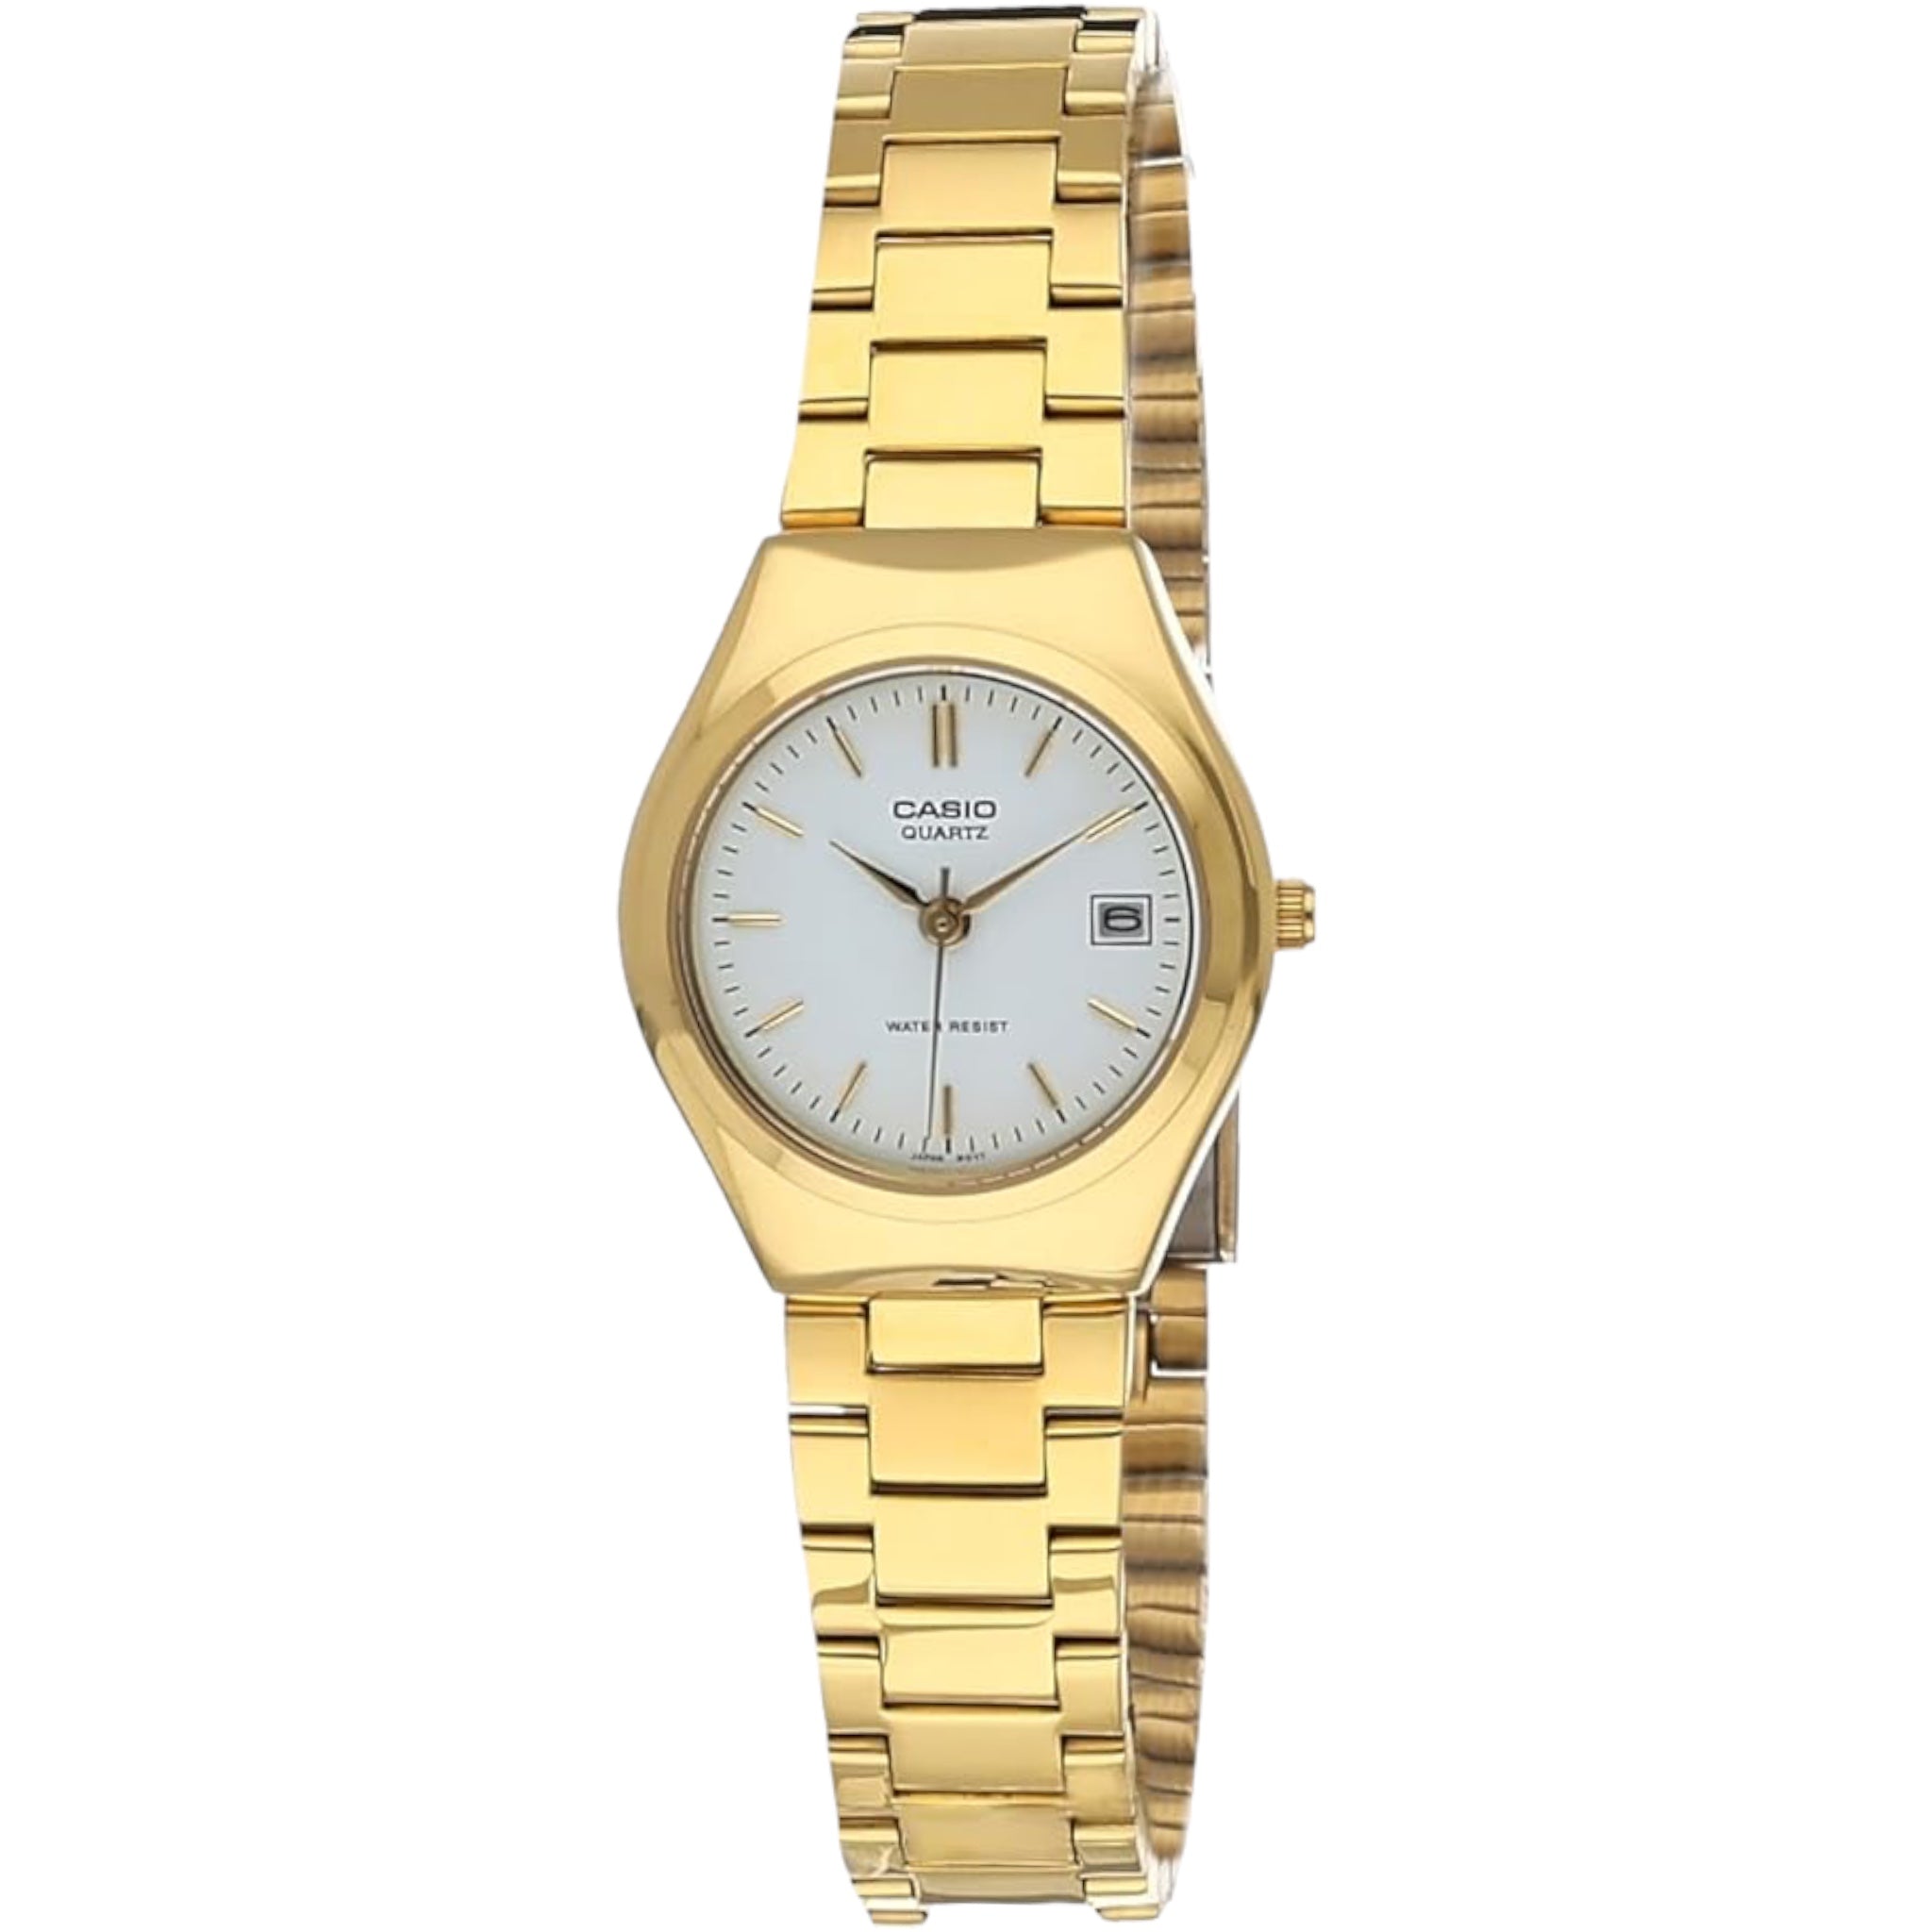 Casio Women's Watch LTP-1170N-7A Gold